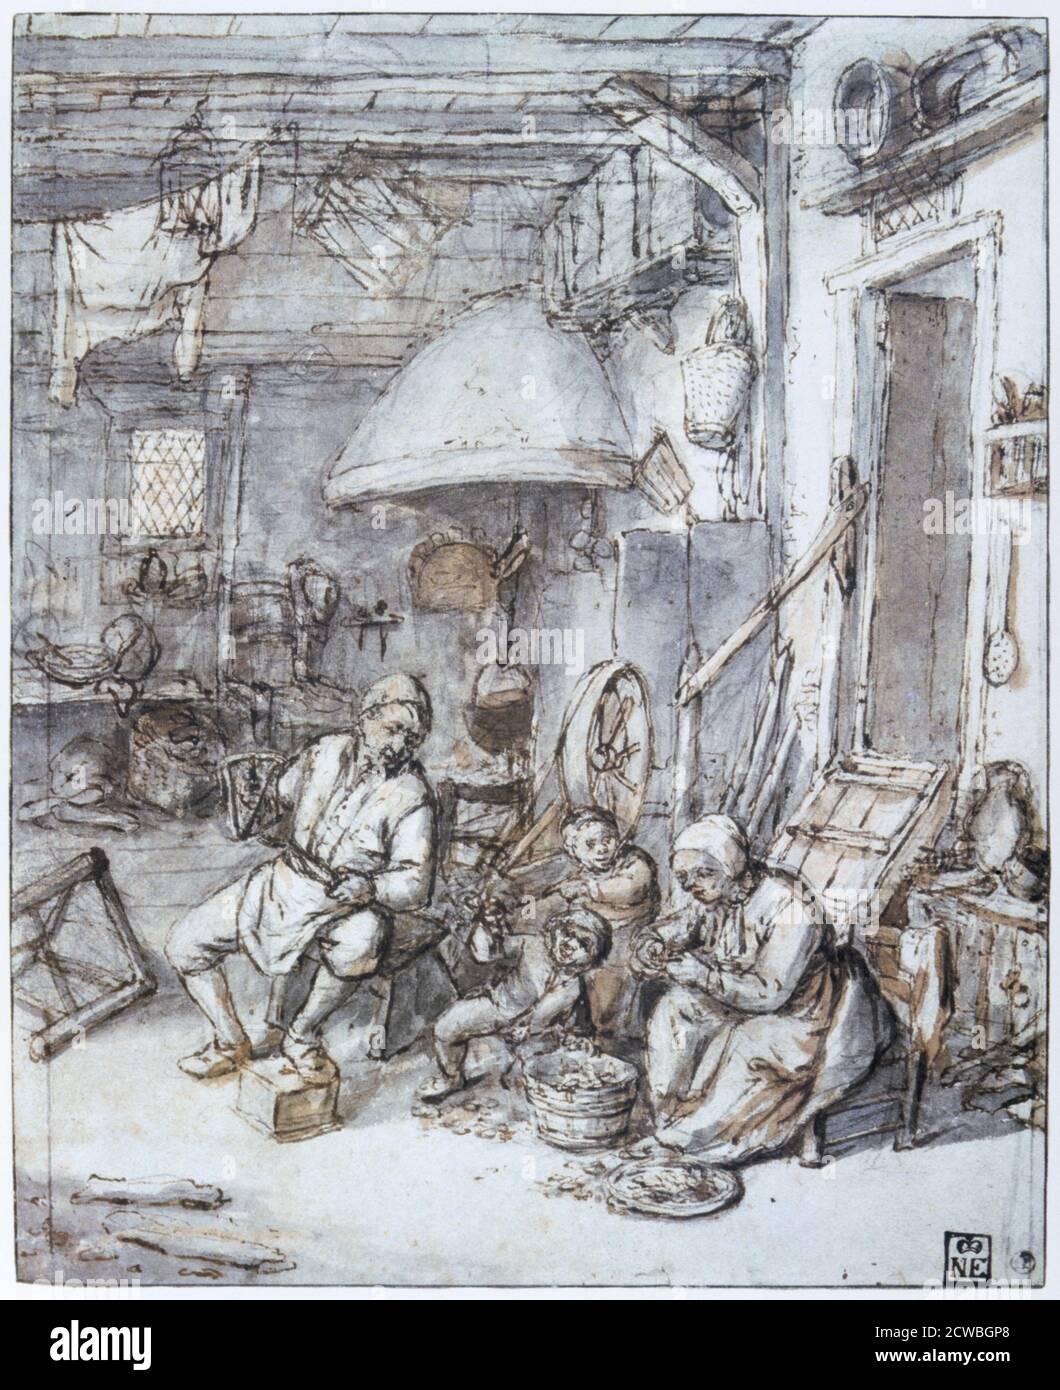 The Dutch Peasants', 17th century. Stock Photo